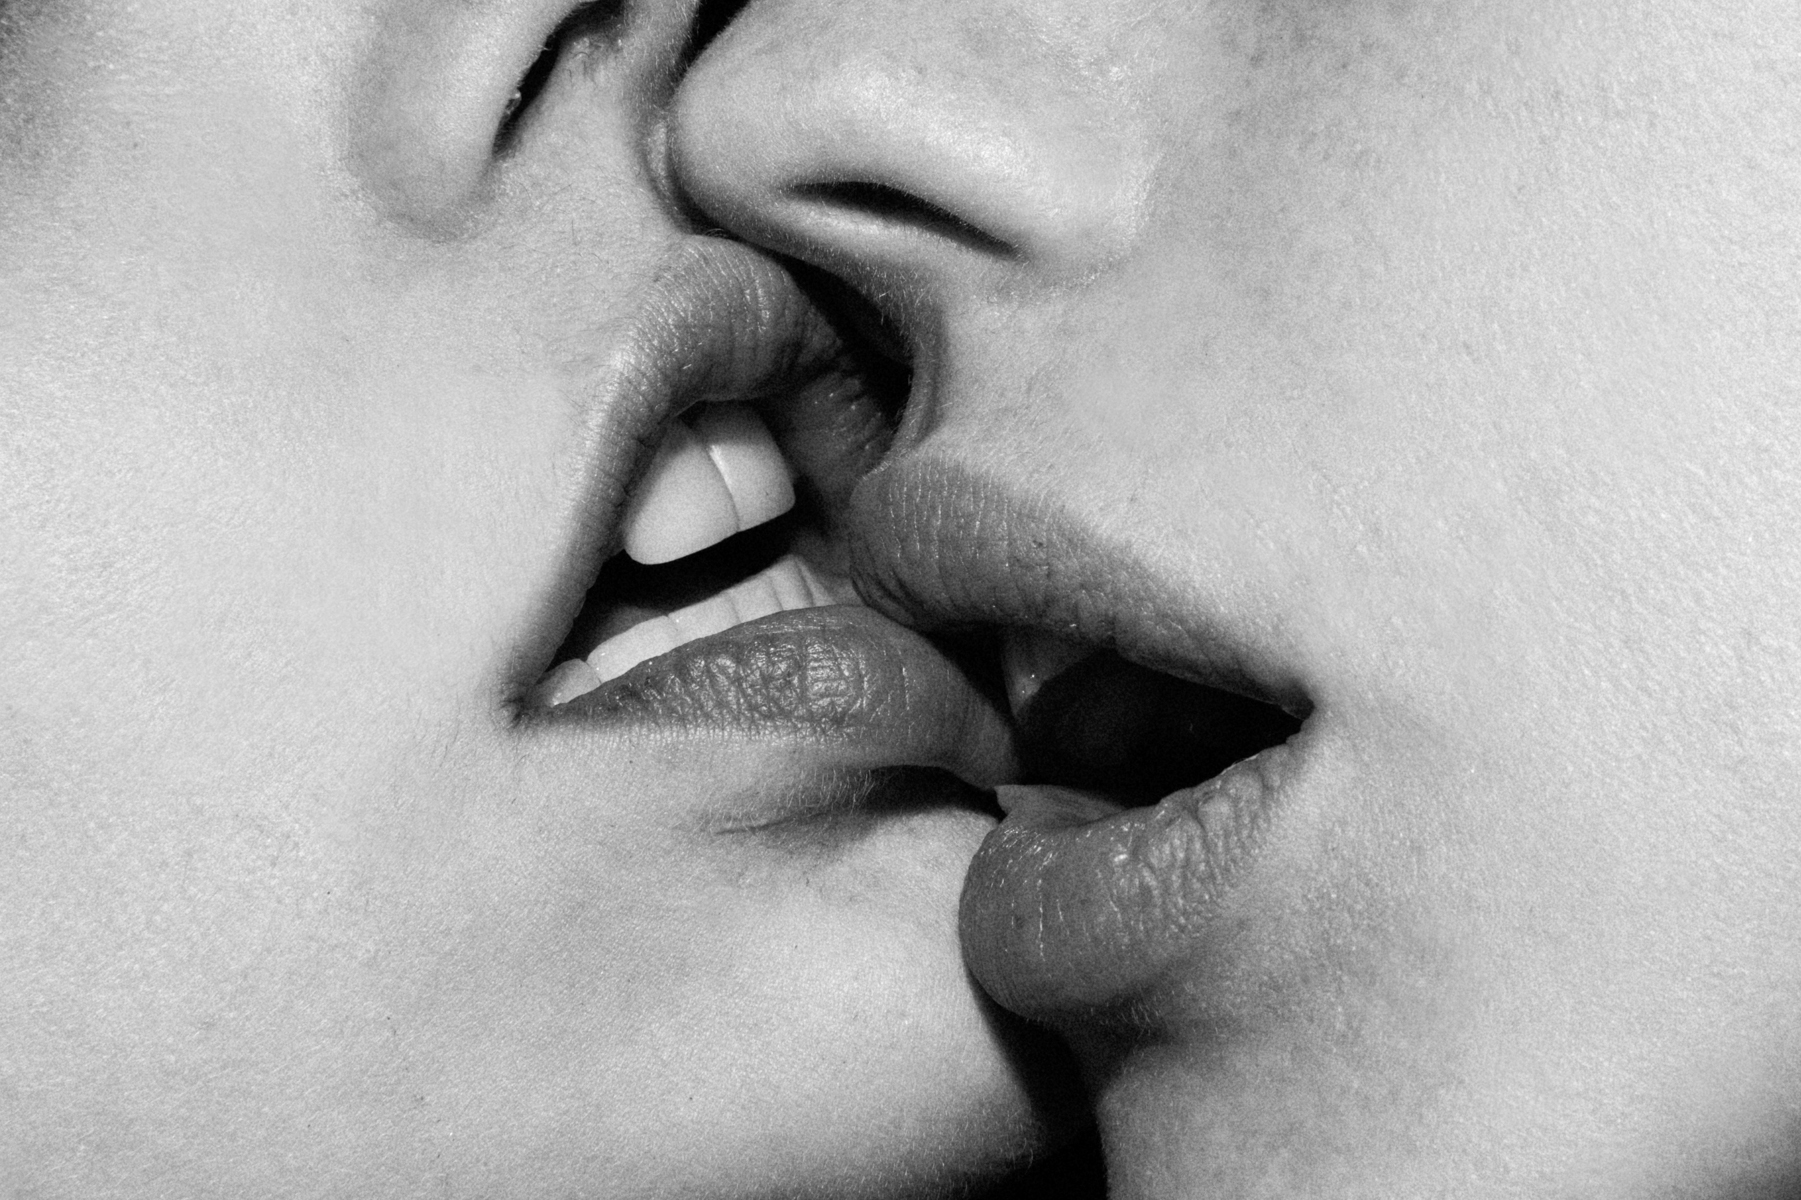 Нежный губы хочу. Поцелуй. Нежный поцелуй. Поцелуй в губы. Поцелуй картинки.